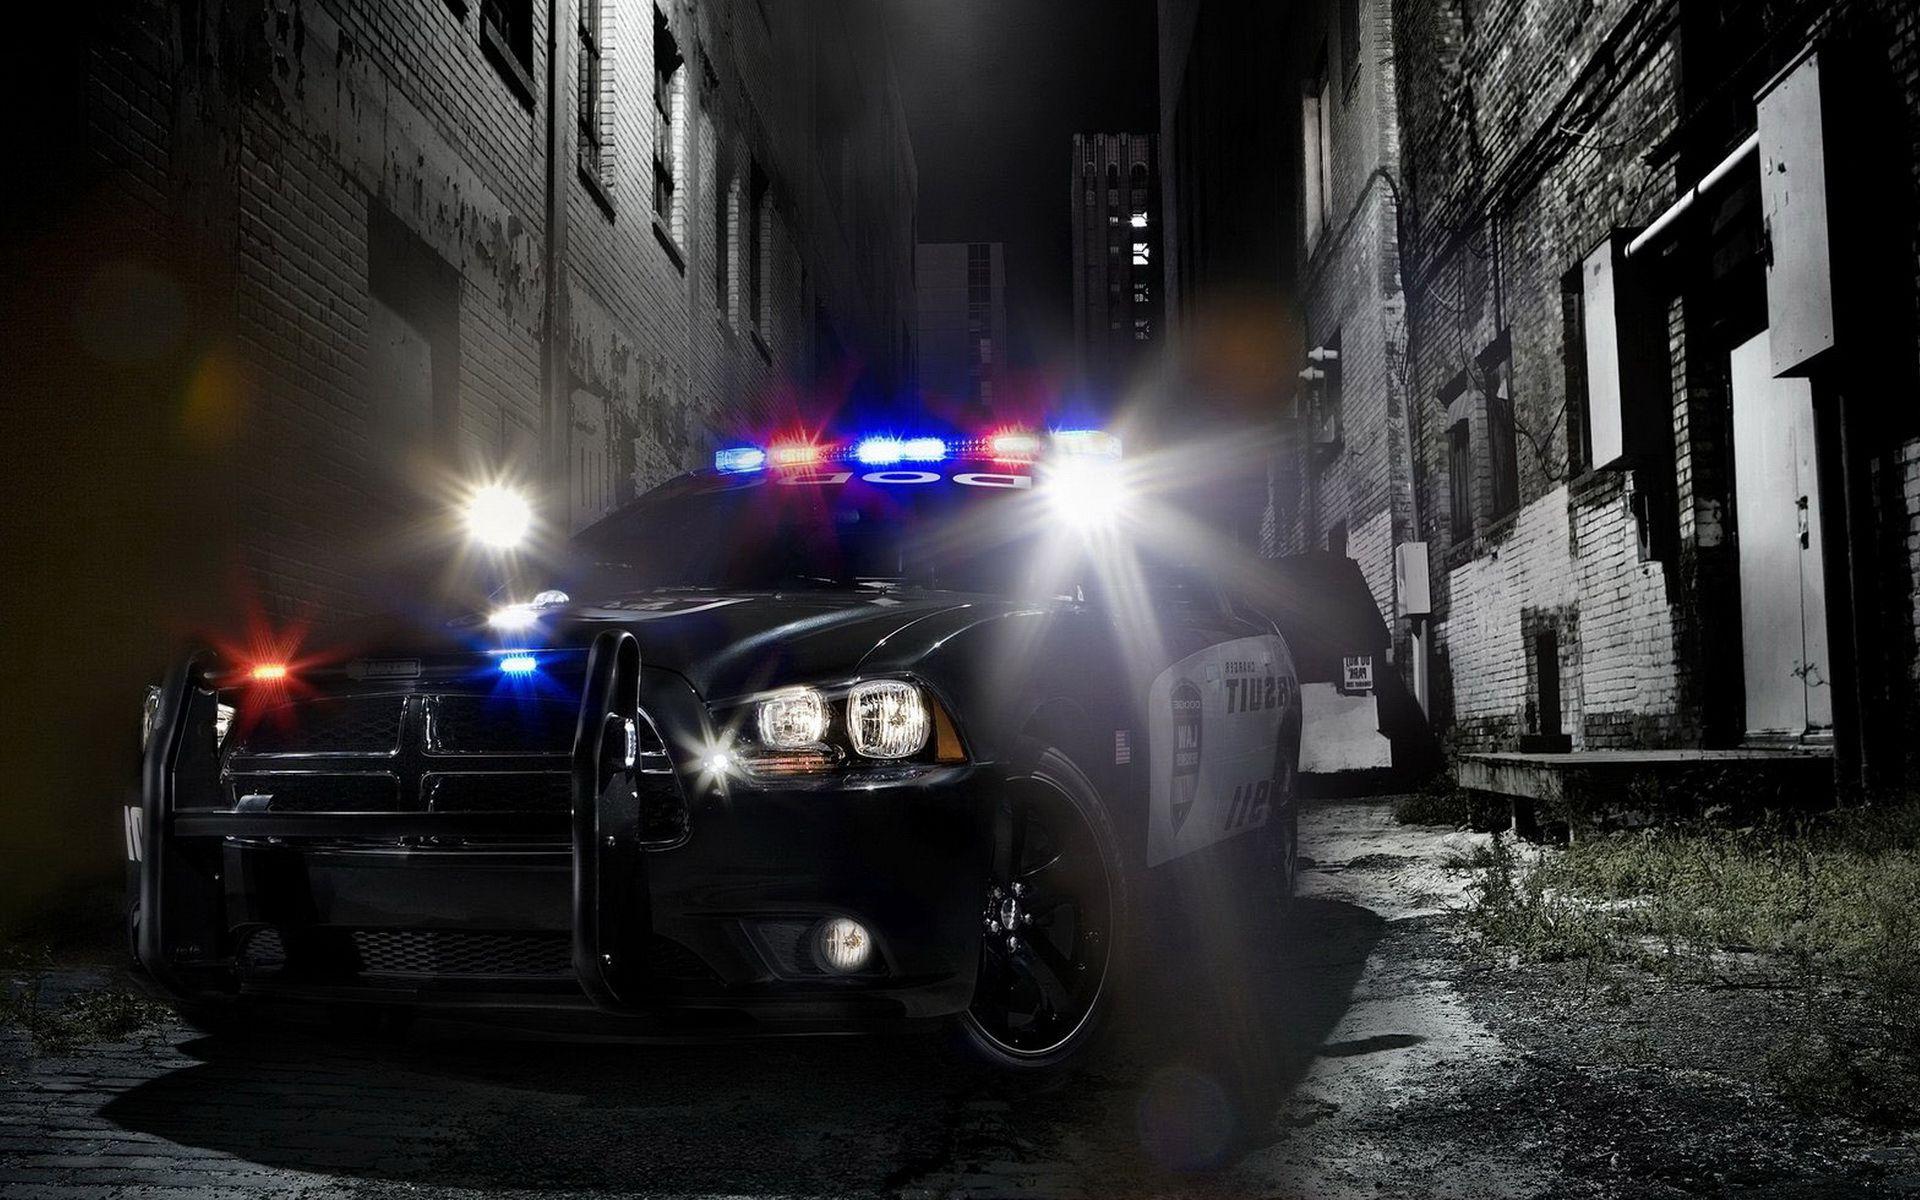 Best Police Car Desktop Wallpaper HD Image Widescreen Law